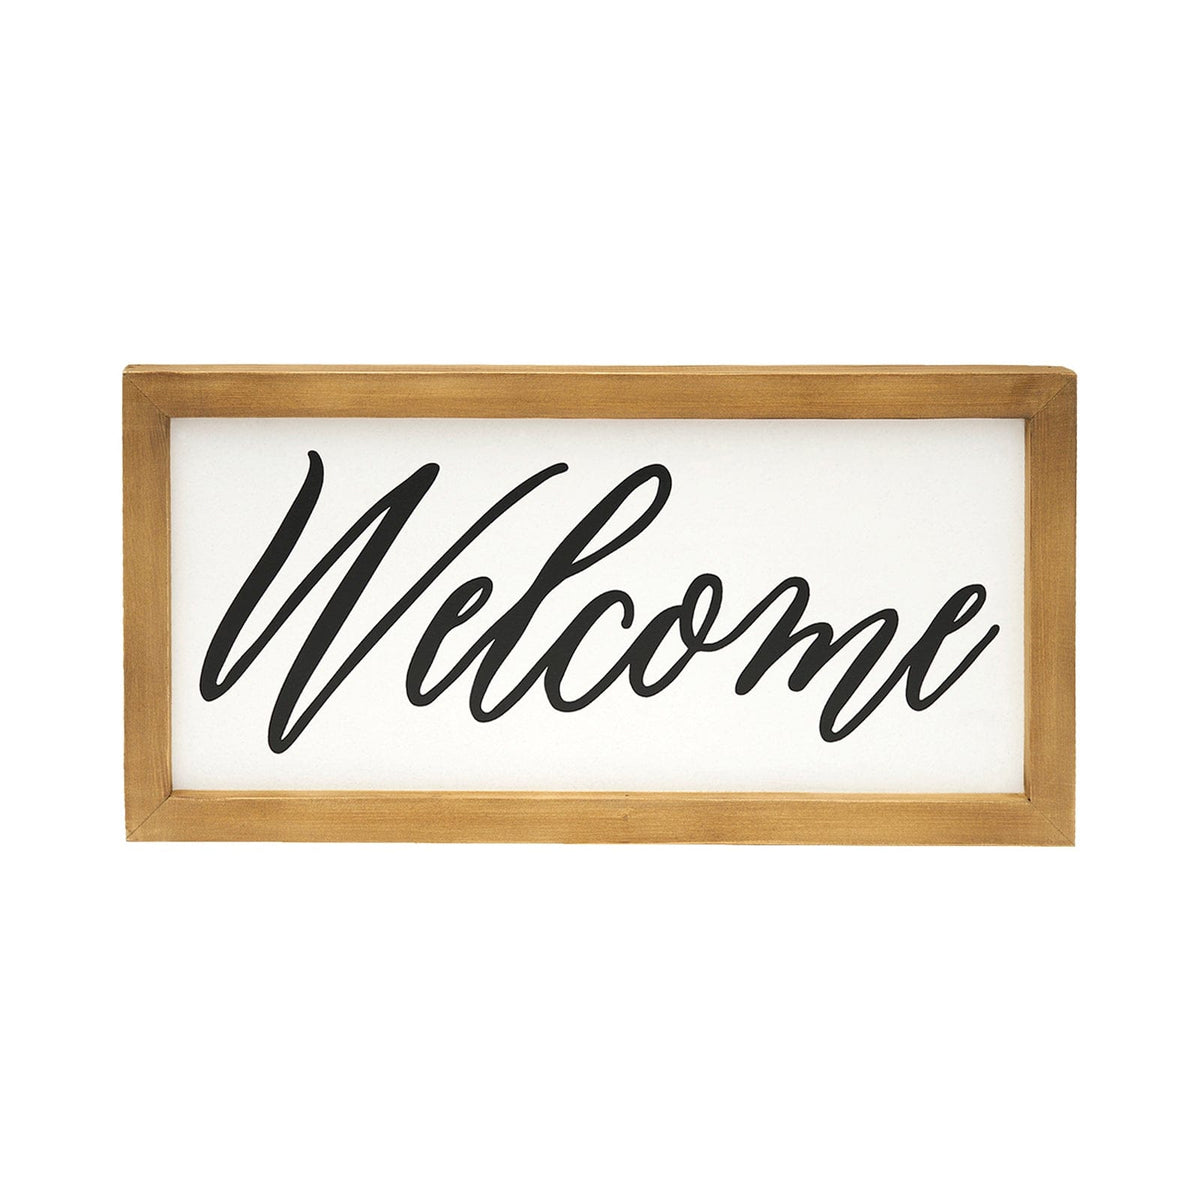 Welcome Sign Gartner Studios Wood Sign 42323